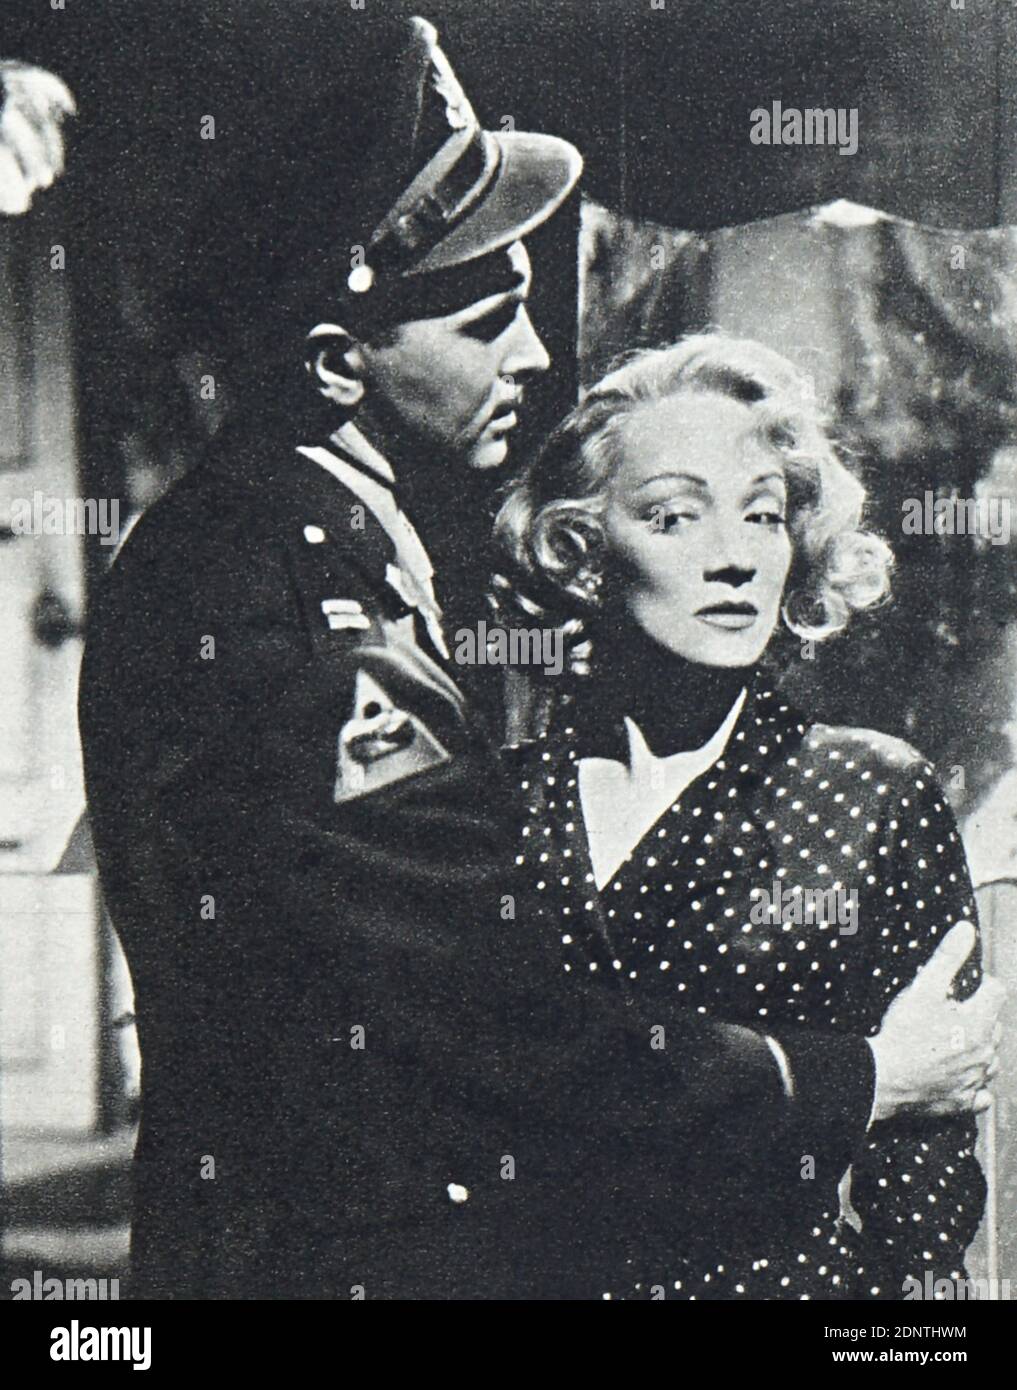 Película de 'A Foreign Affair' protagonizada por Jean Arthur, Marlene Dietrich, John Lund y Millard Mitchell. Foto de stock